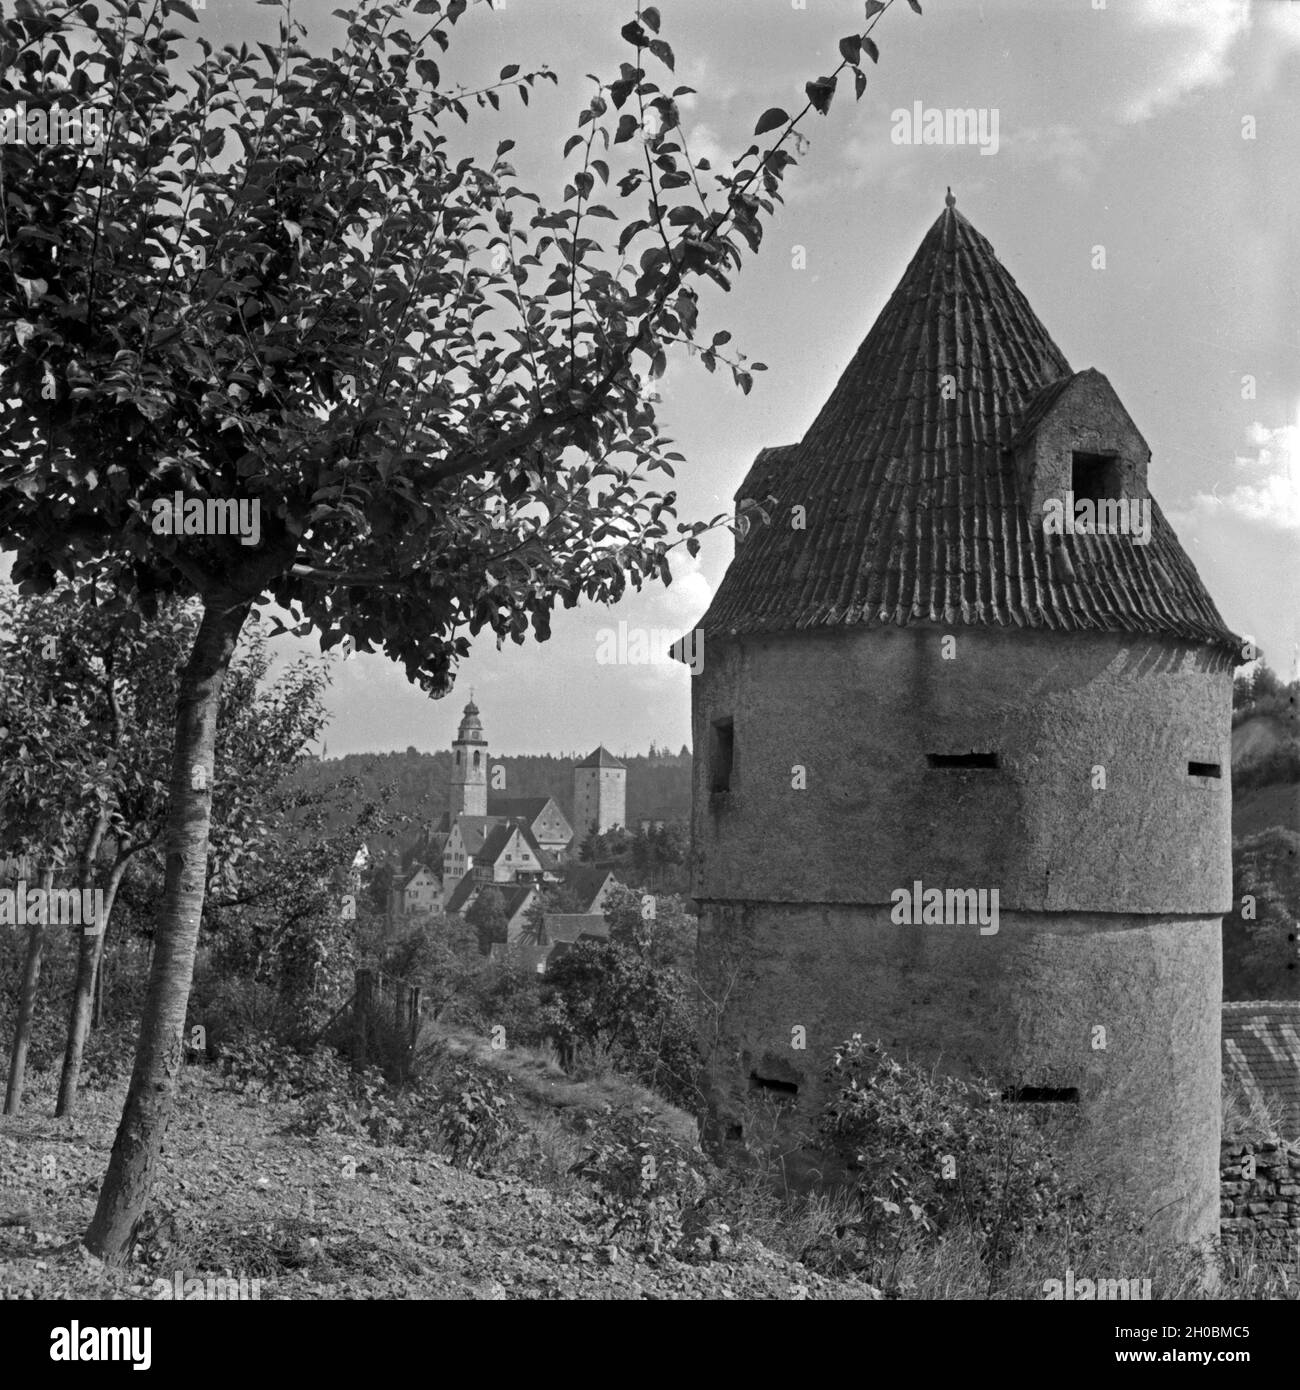 Der Ringmauerturm in Horb am Neckar, Schwarzwald, Deutschland 1930er Jahre. Watch out of a curtain wall at Horb at river Neckar, Black Forest, Germany 1930s. Stock Photo